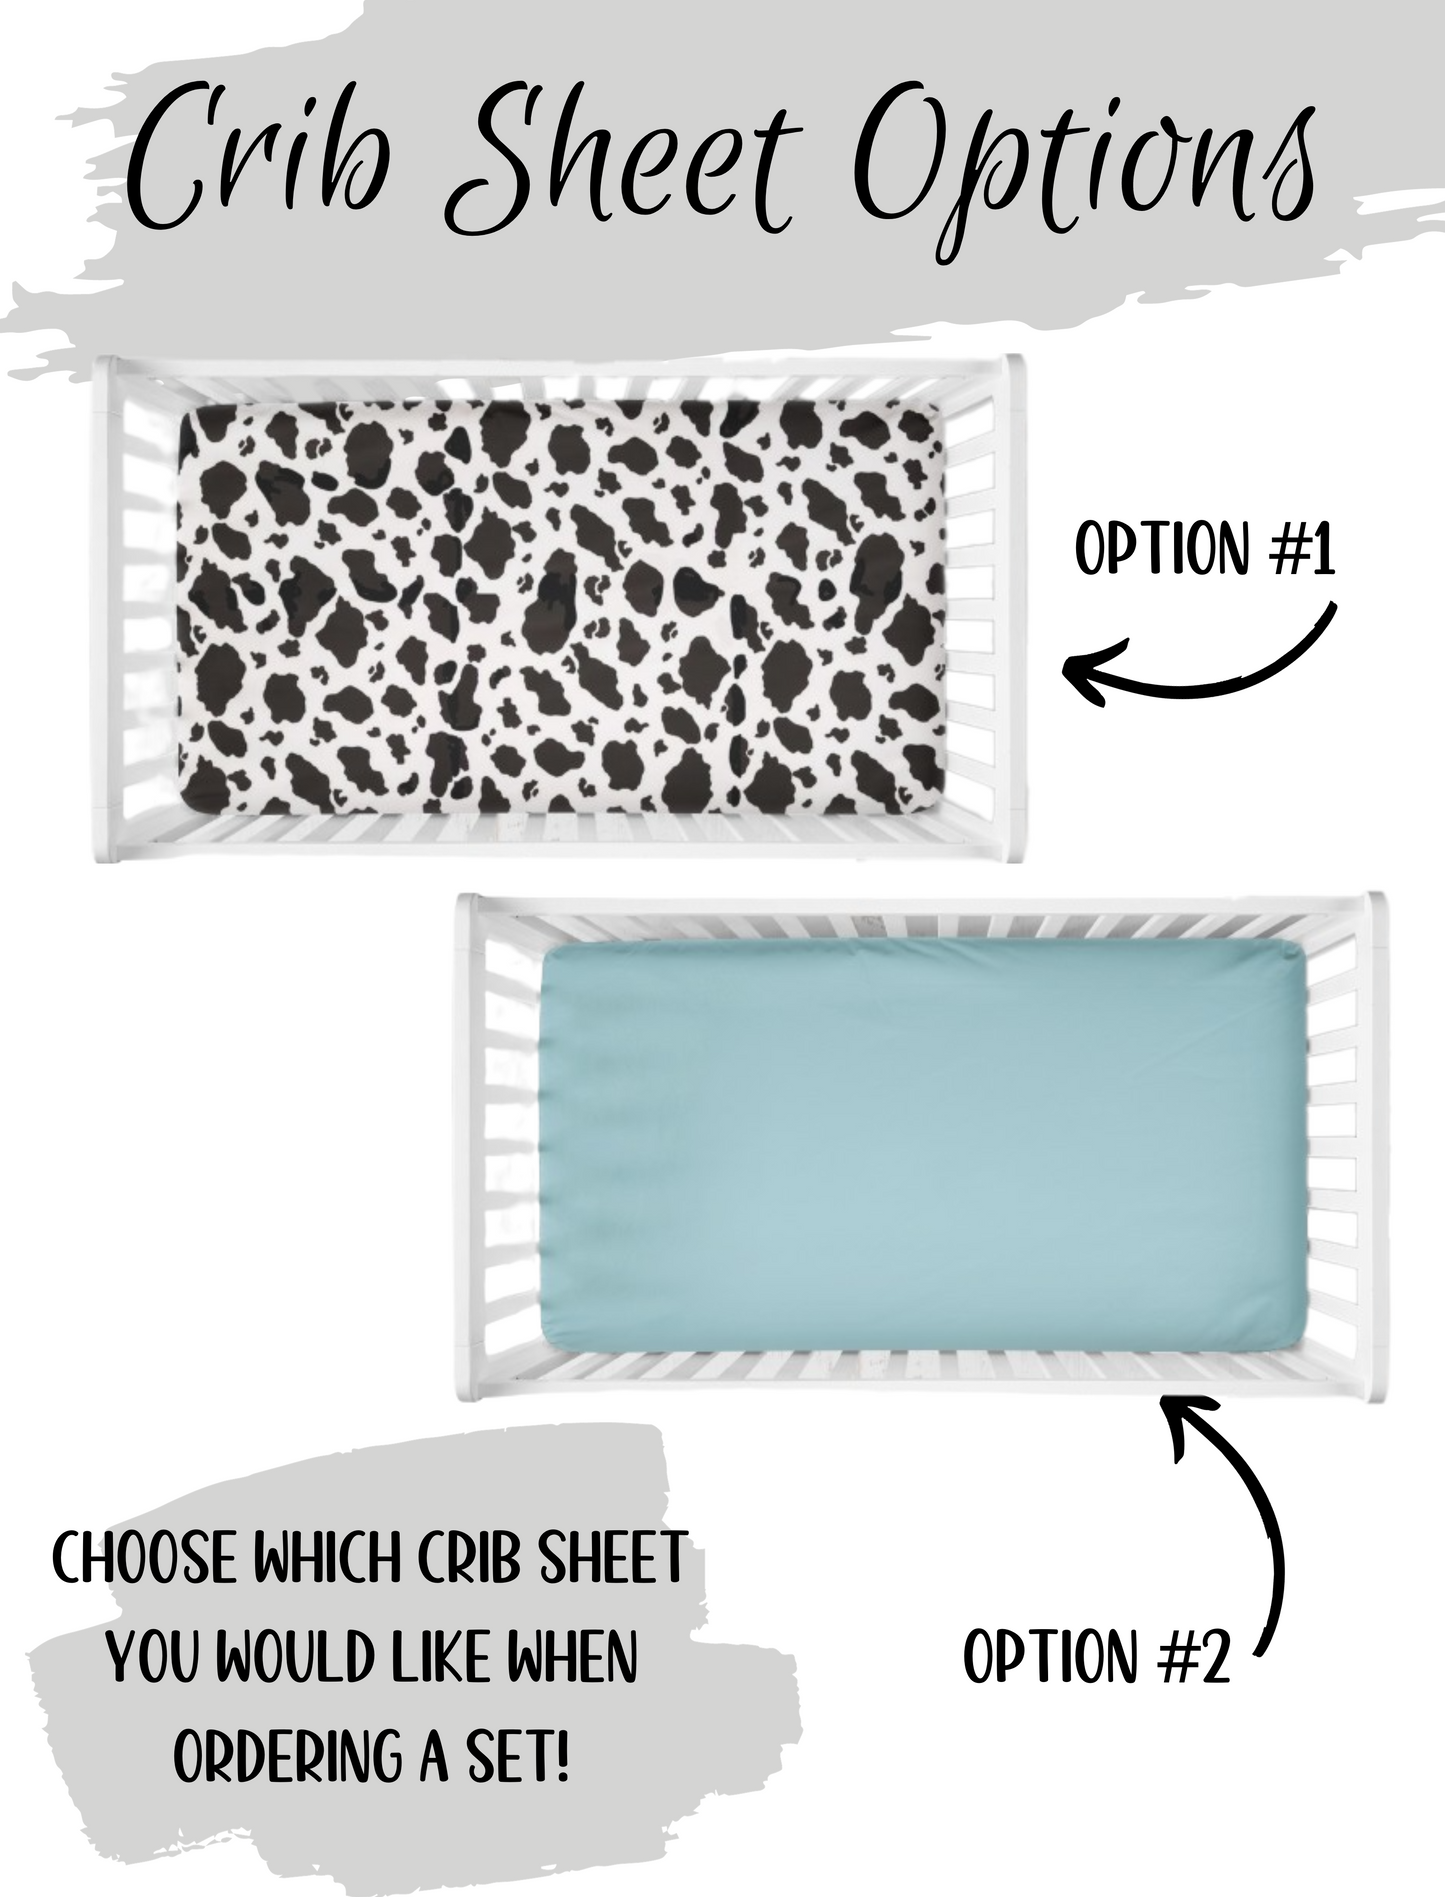 optional crib sheet options - replace the cow crib sheet with an aqua crib sheet